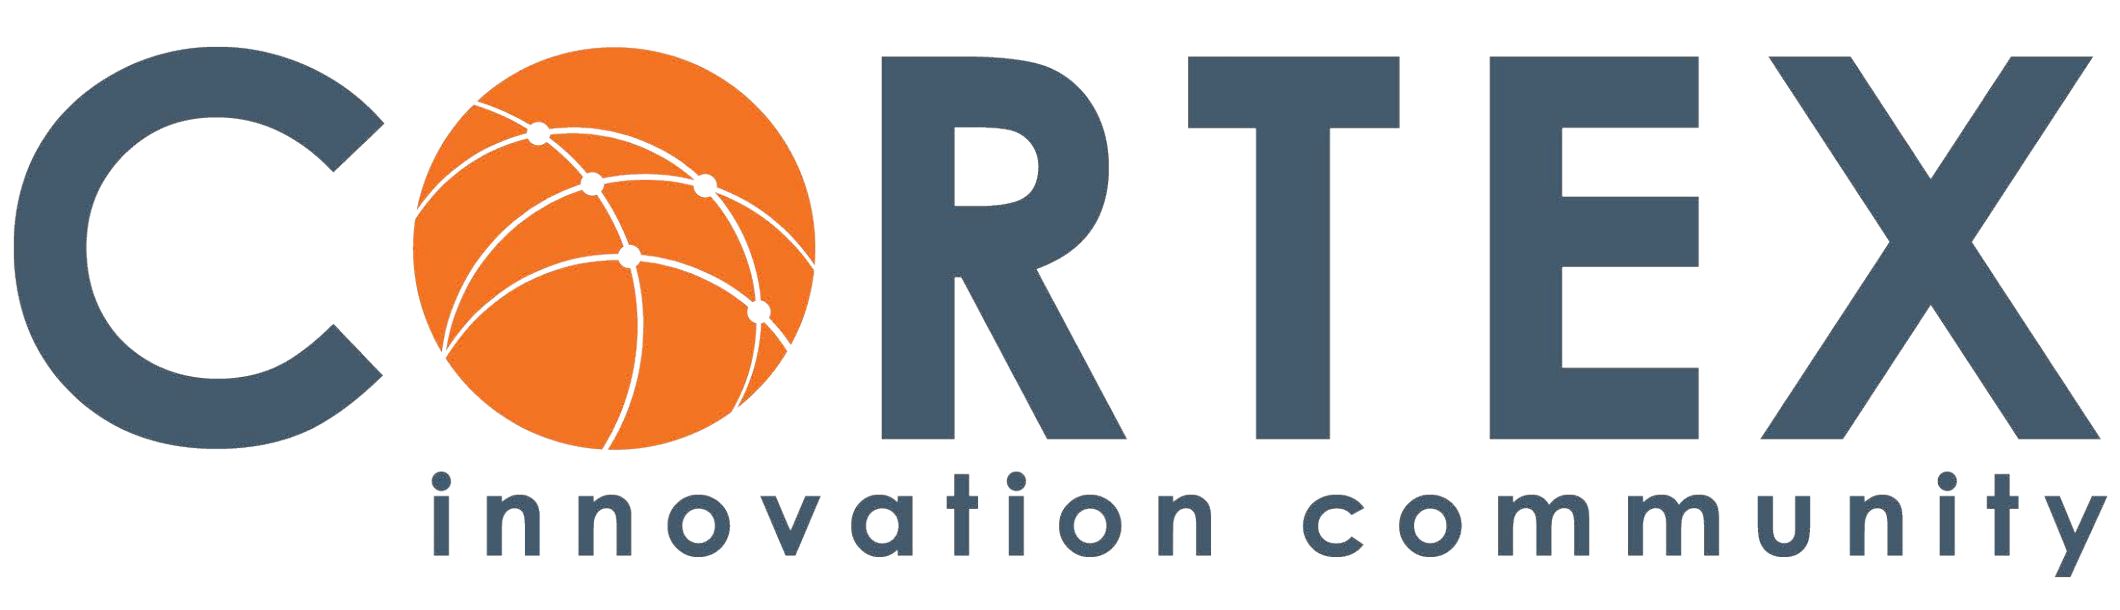 Cortex Innovation District